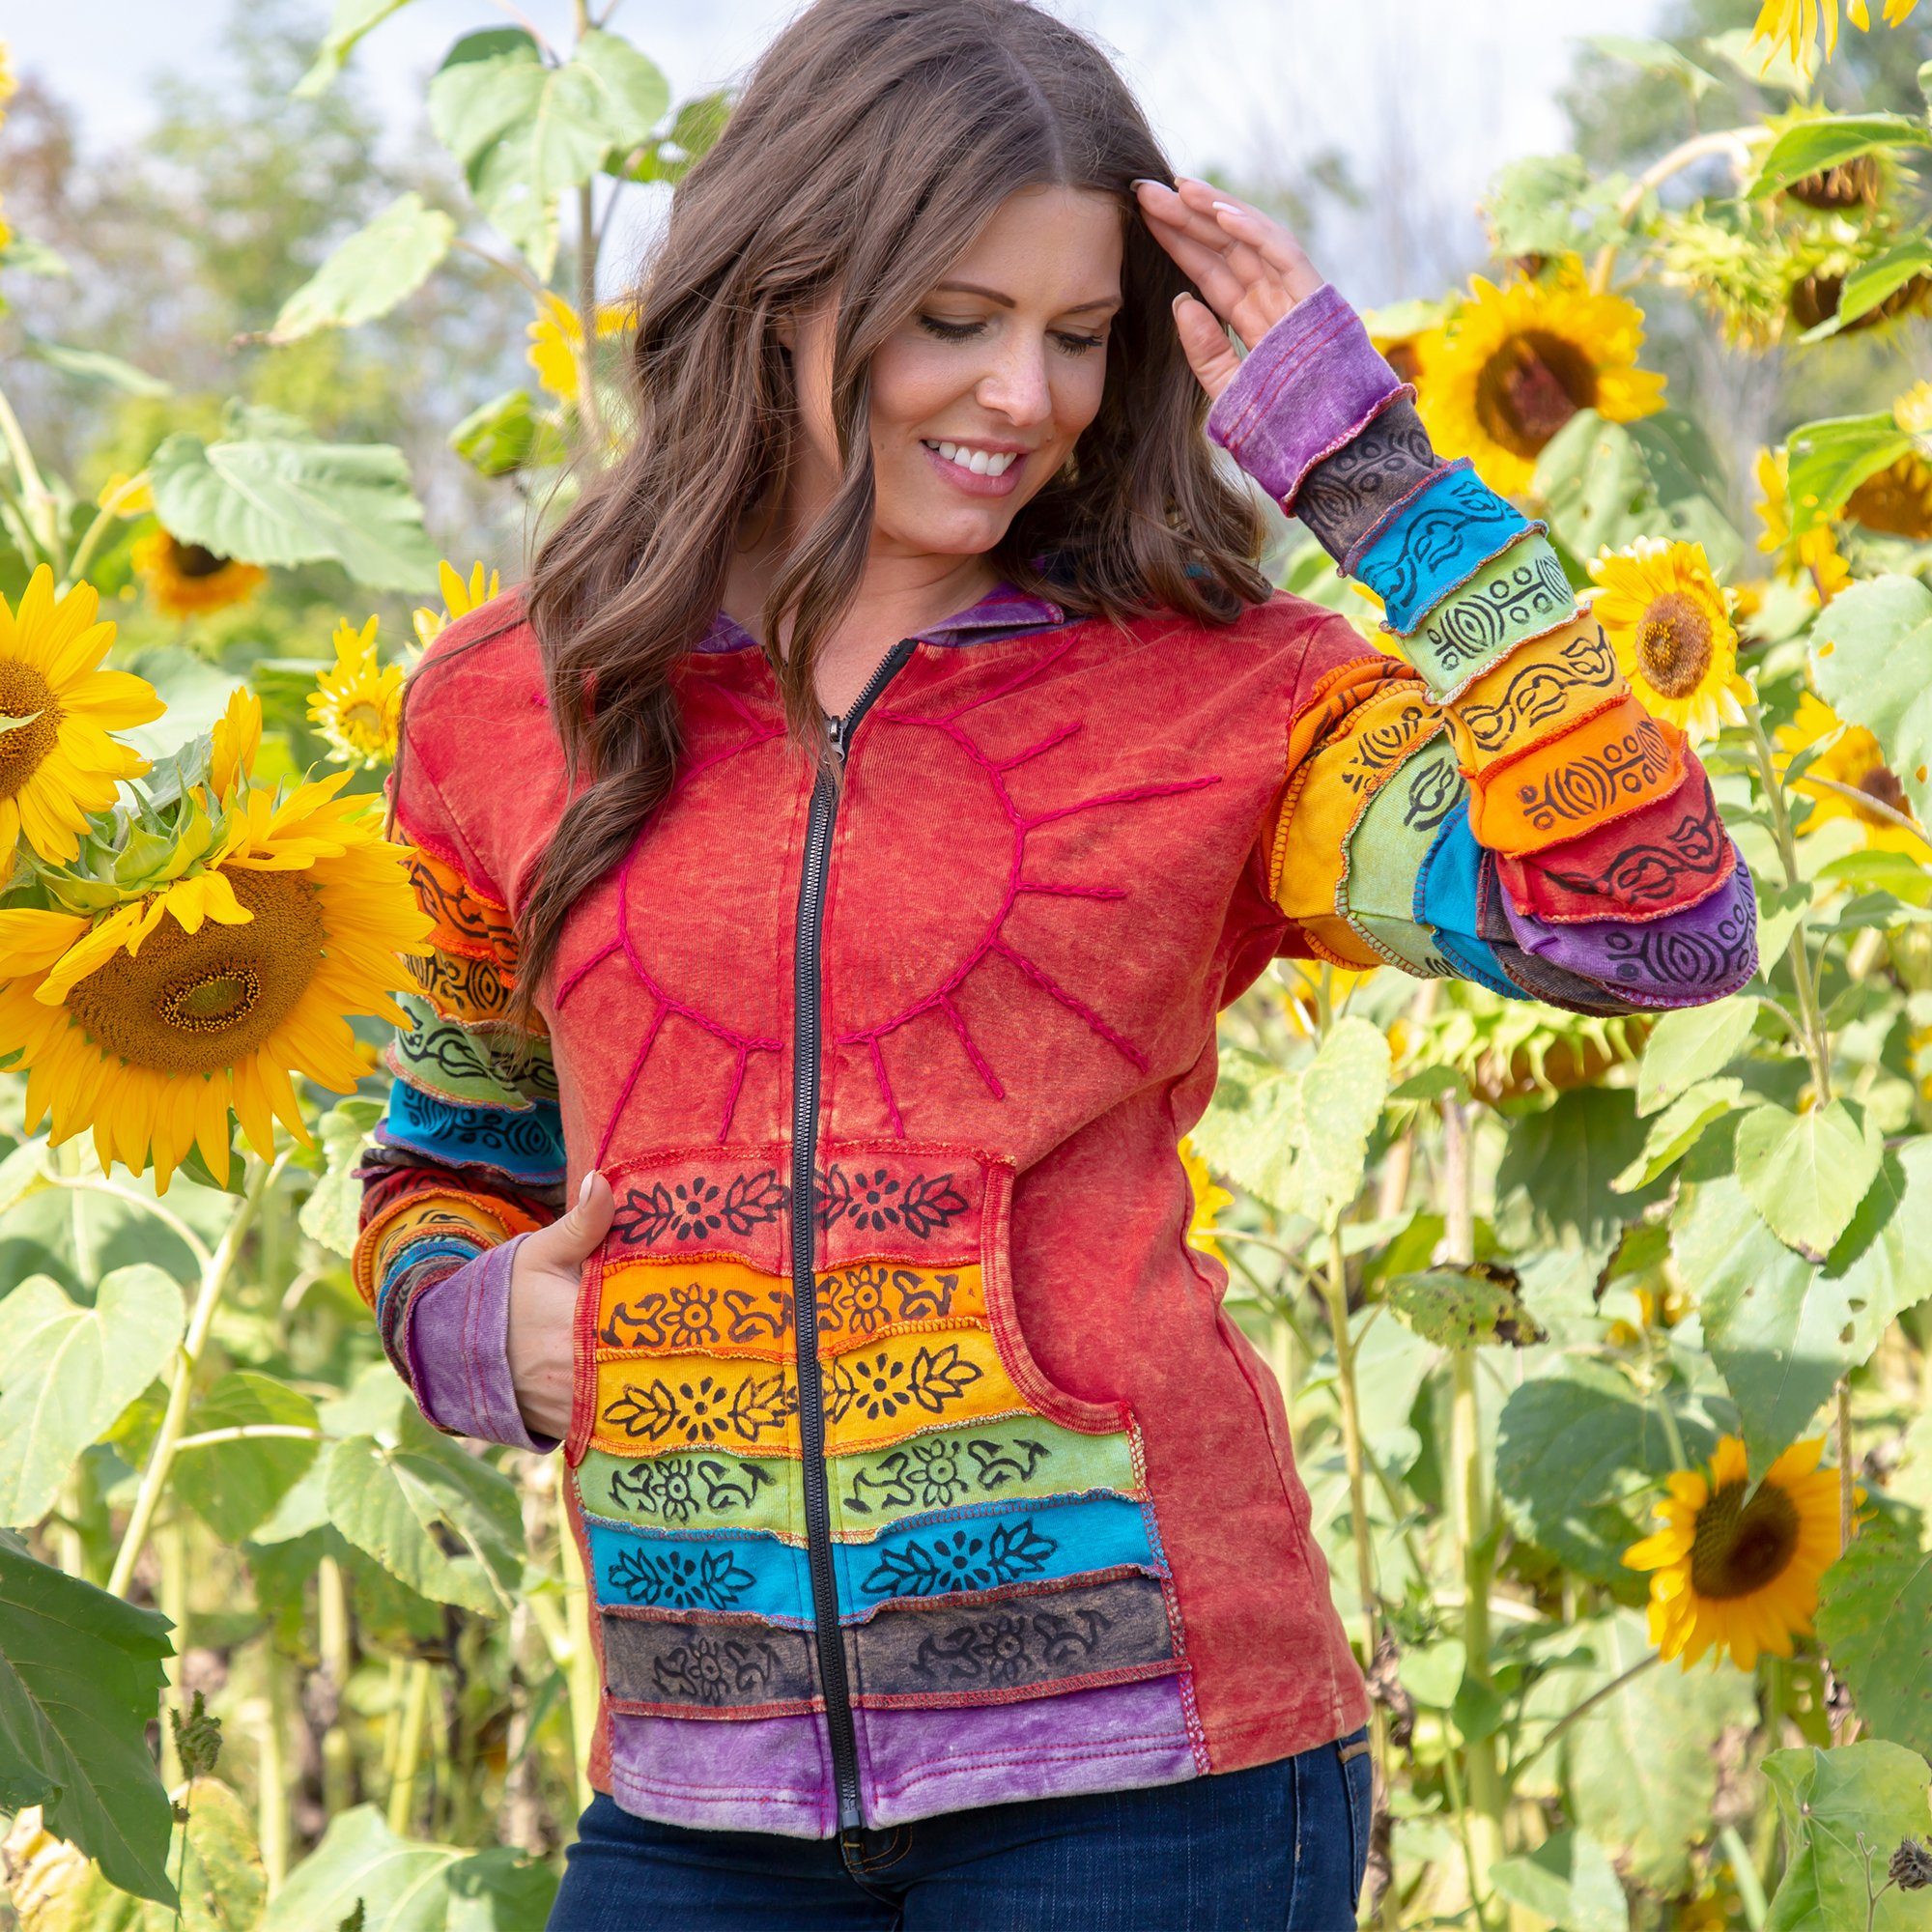 Sunshine Daydream Hooded Jacket , Fair Trade Women's Jacket - Rust - L/XL